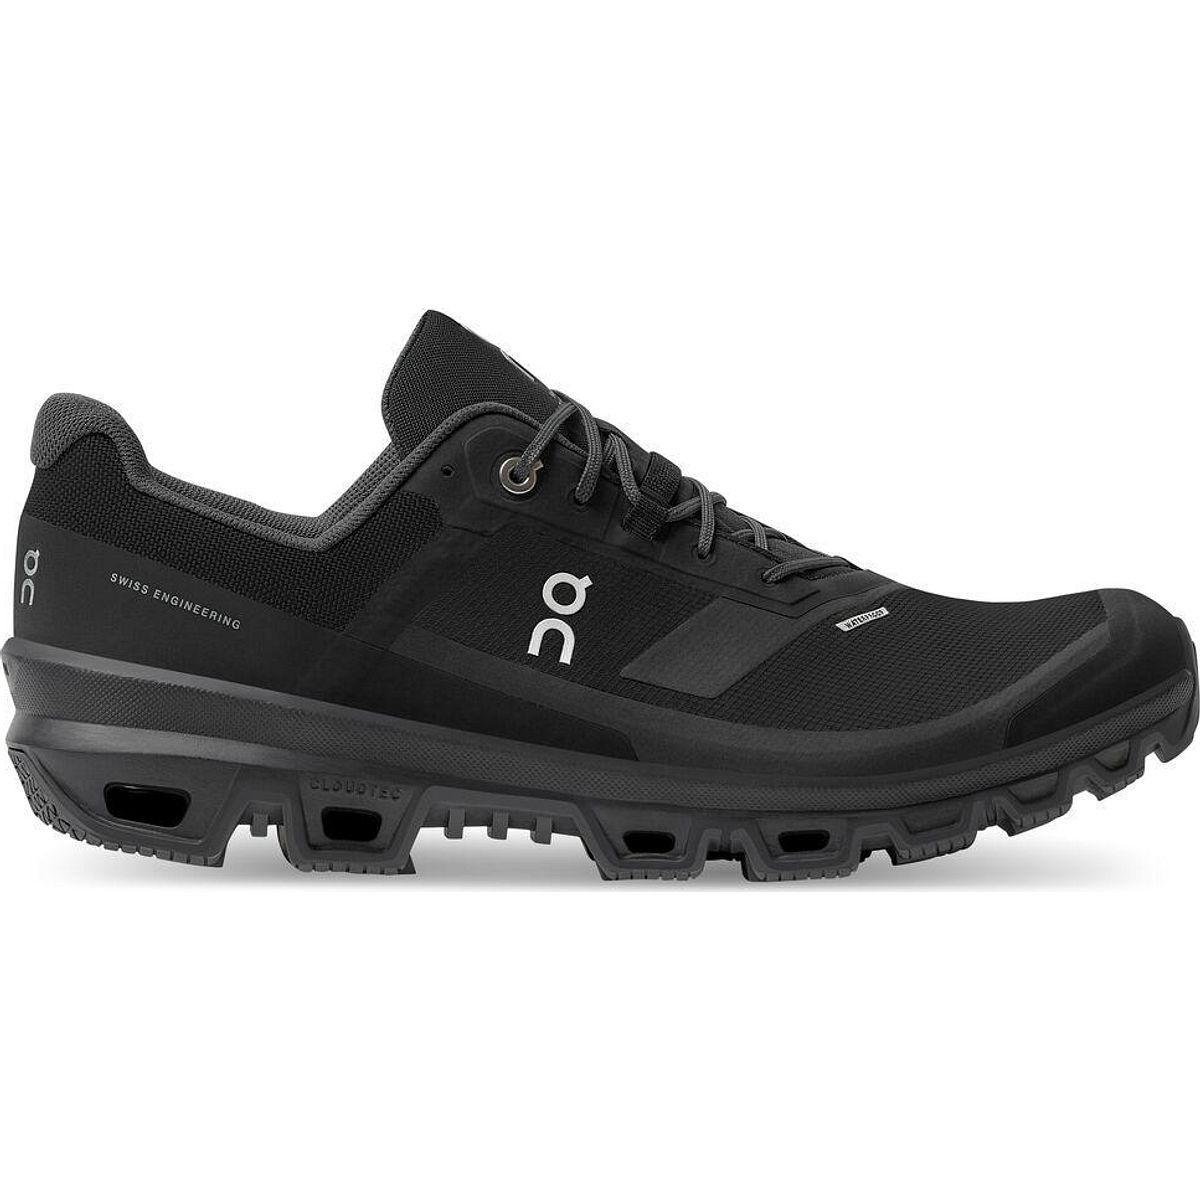 Cloudventure Waterproof Trail Run Shoe - Men's Product Image